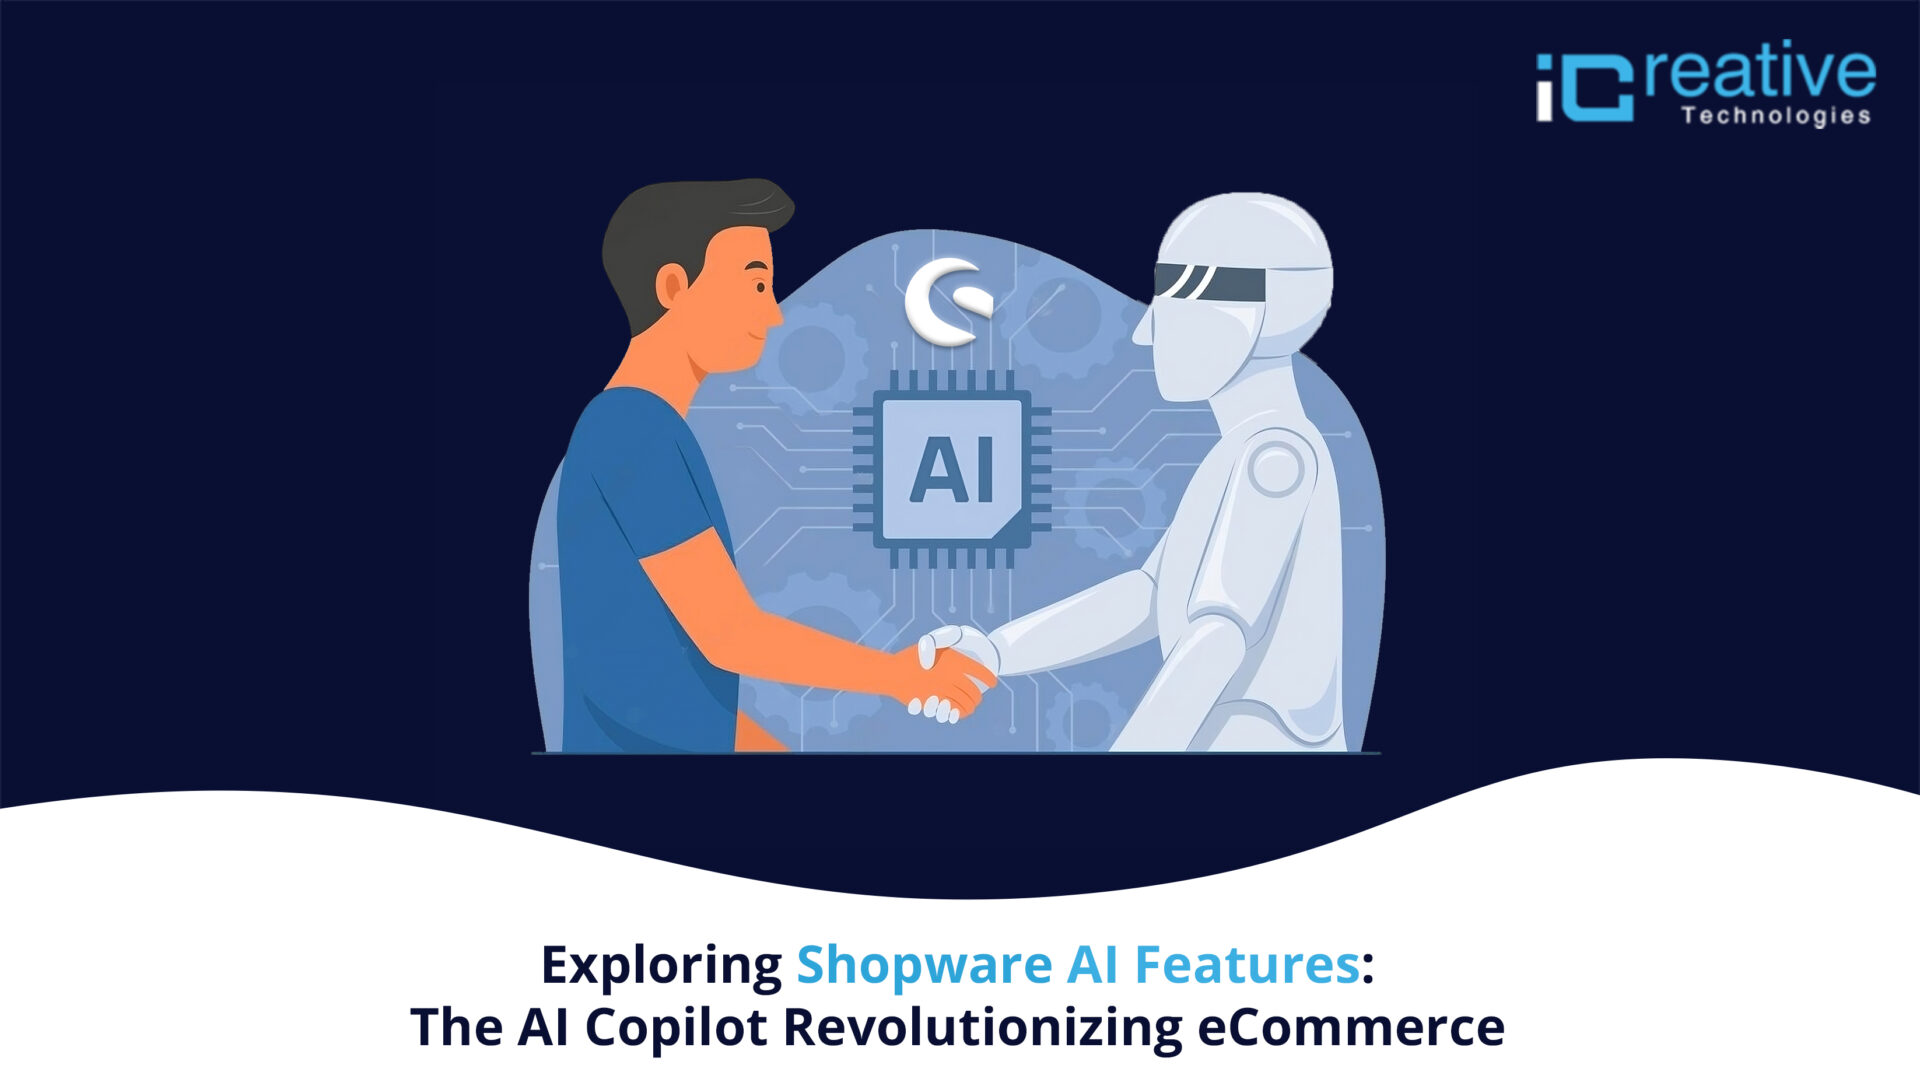 Shopware AI Features | iCreative Technologies